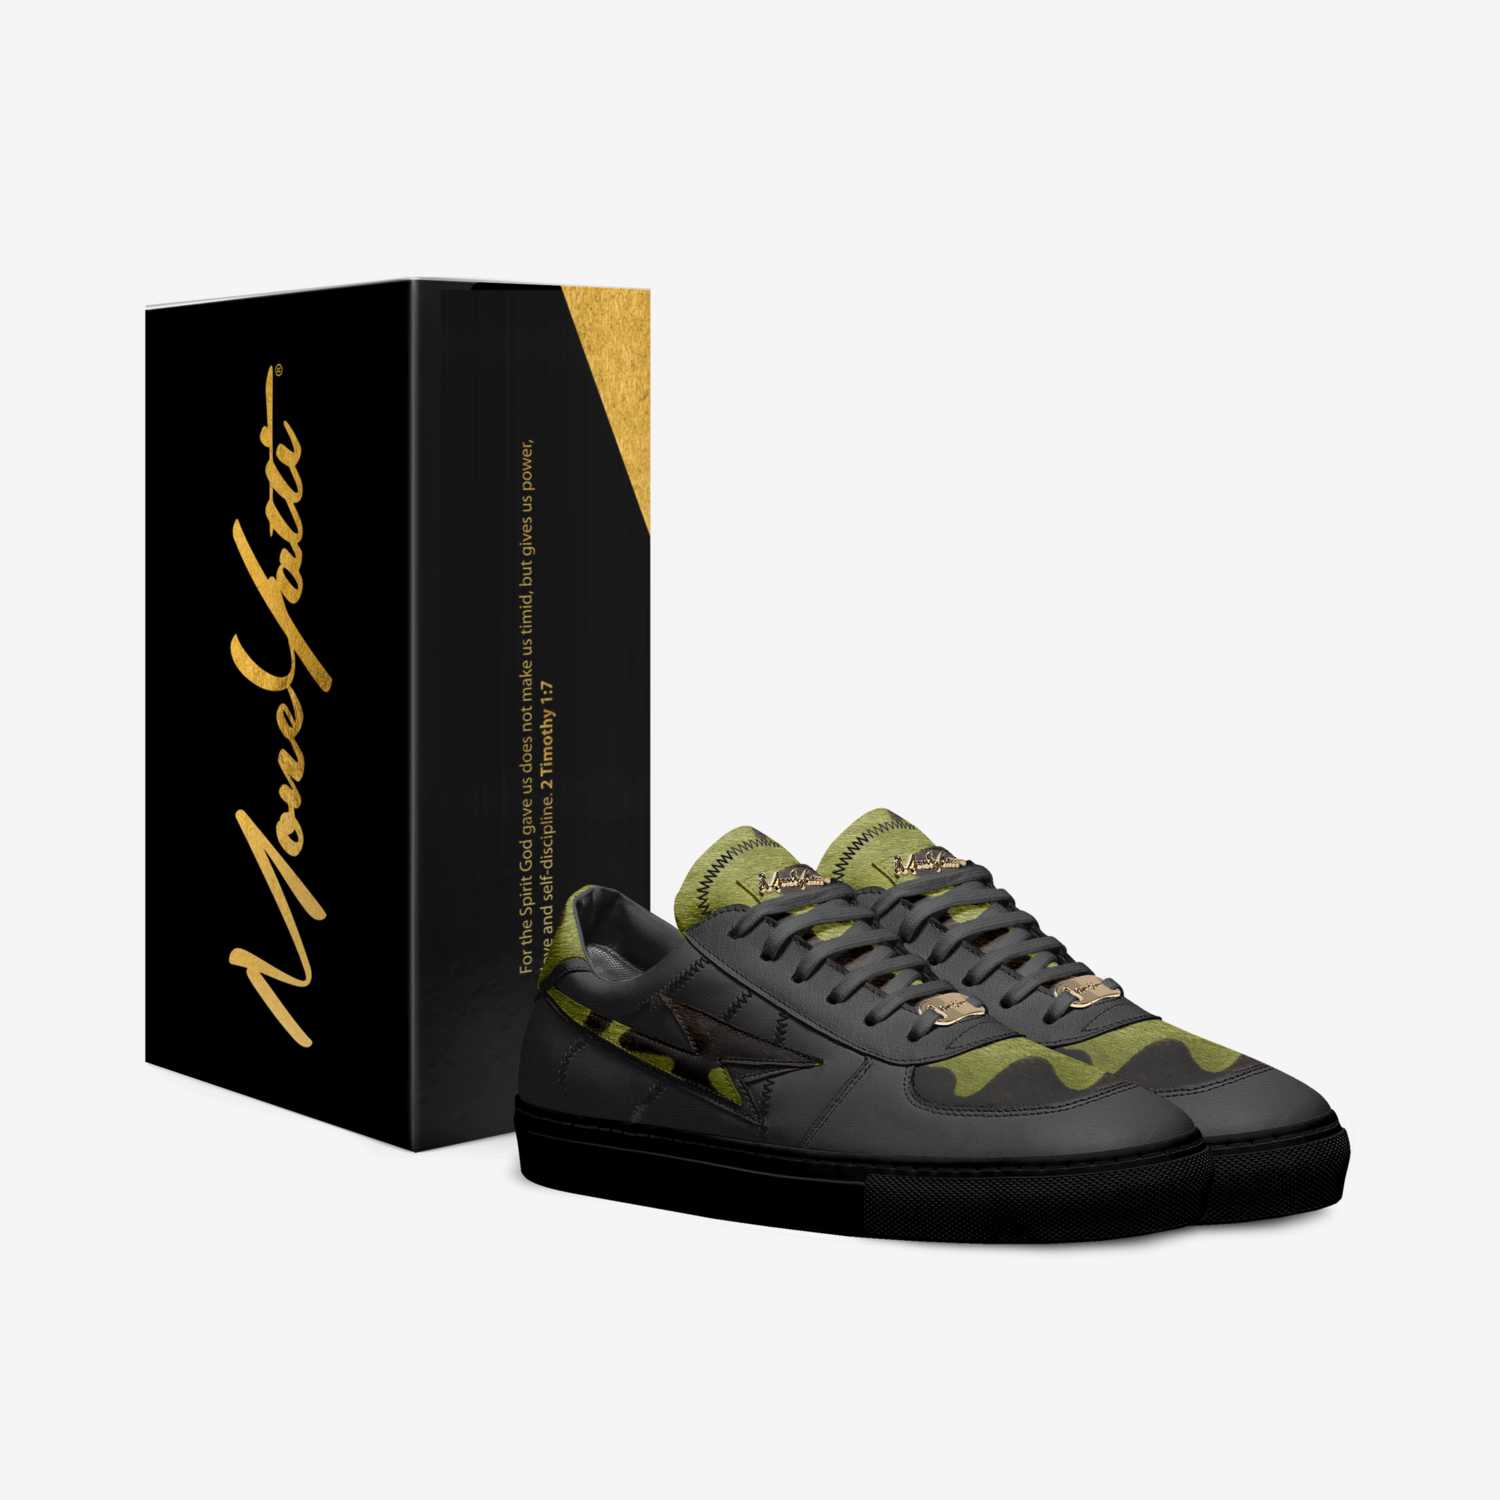 Moneyatti RebLW04 custom made in Italy shoes by Moneyatti Brand | Box view